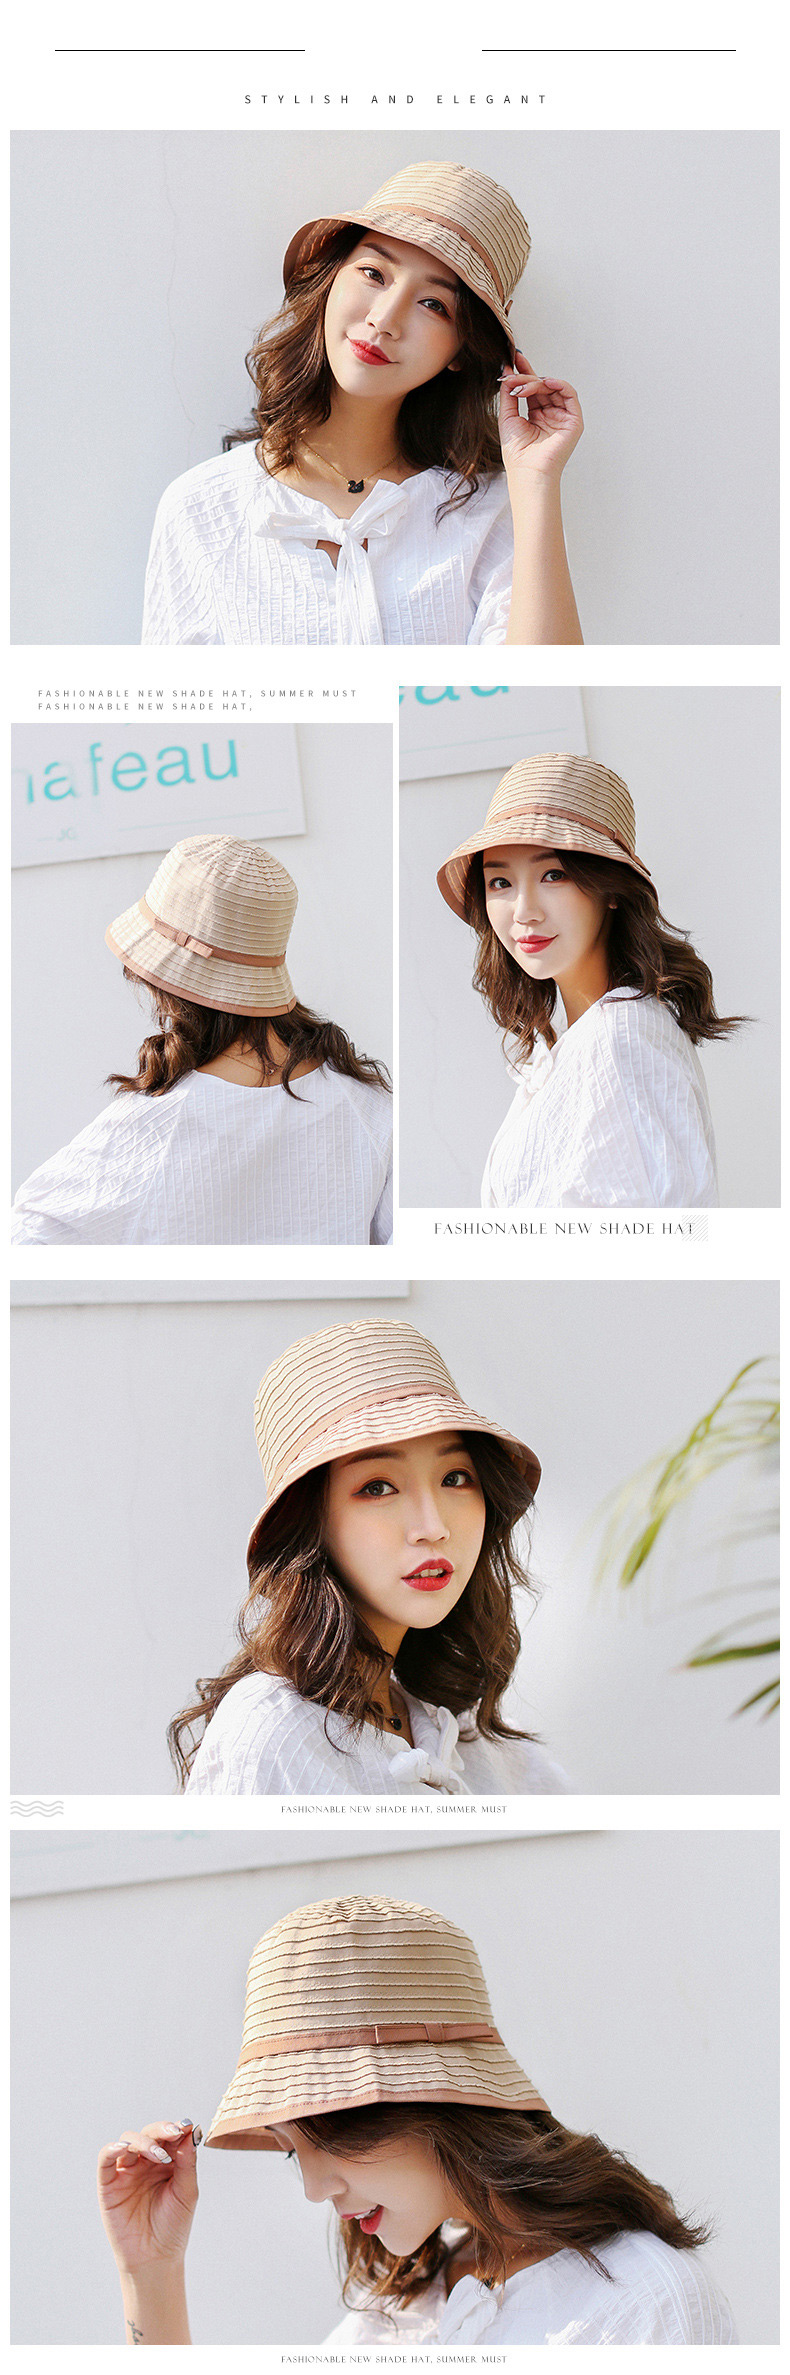 Trendy Pink Stripe Pattern Decorated Sunshade Hat,Sun Hats